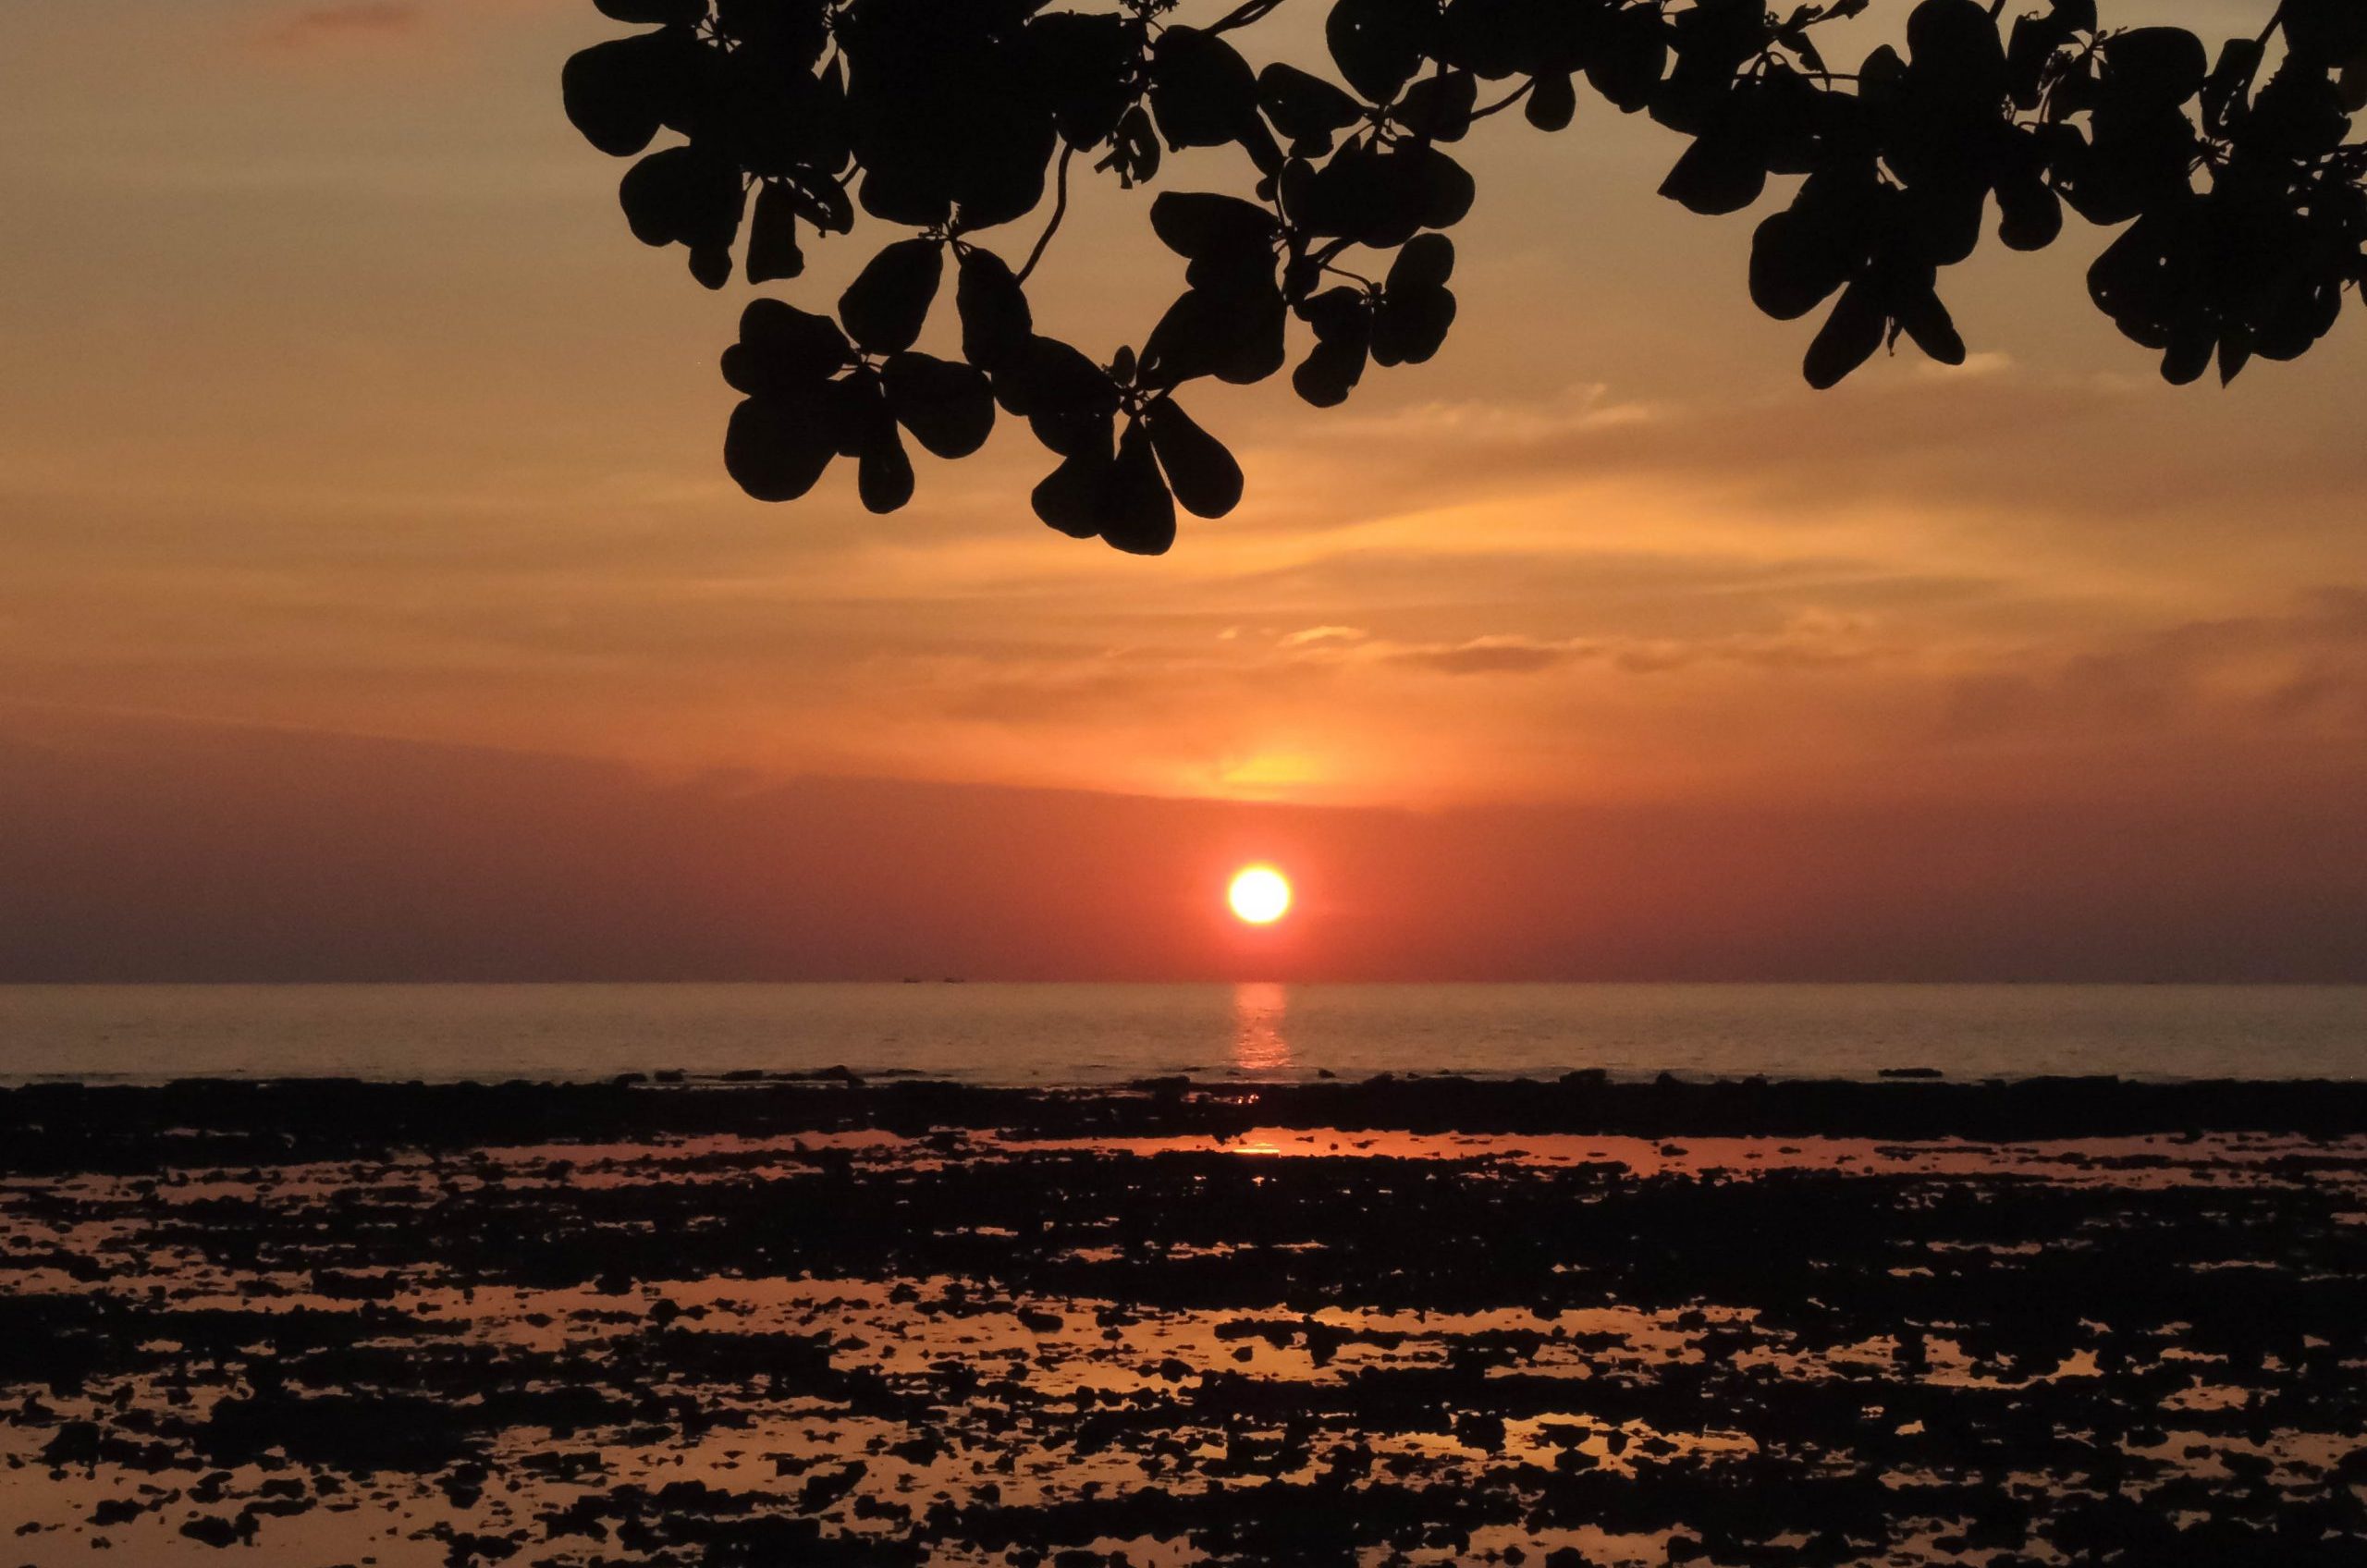 Sunset, rock pools and leaves Klong Khon beach 2 (1 of 1)